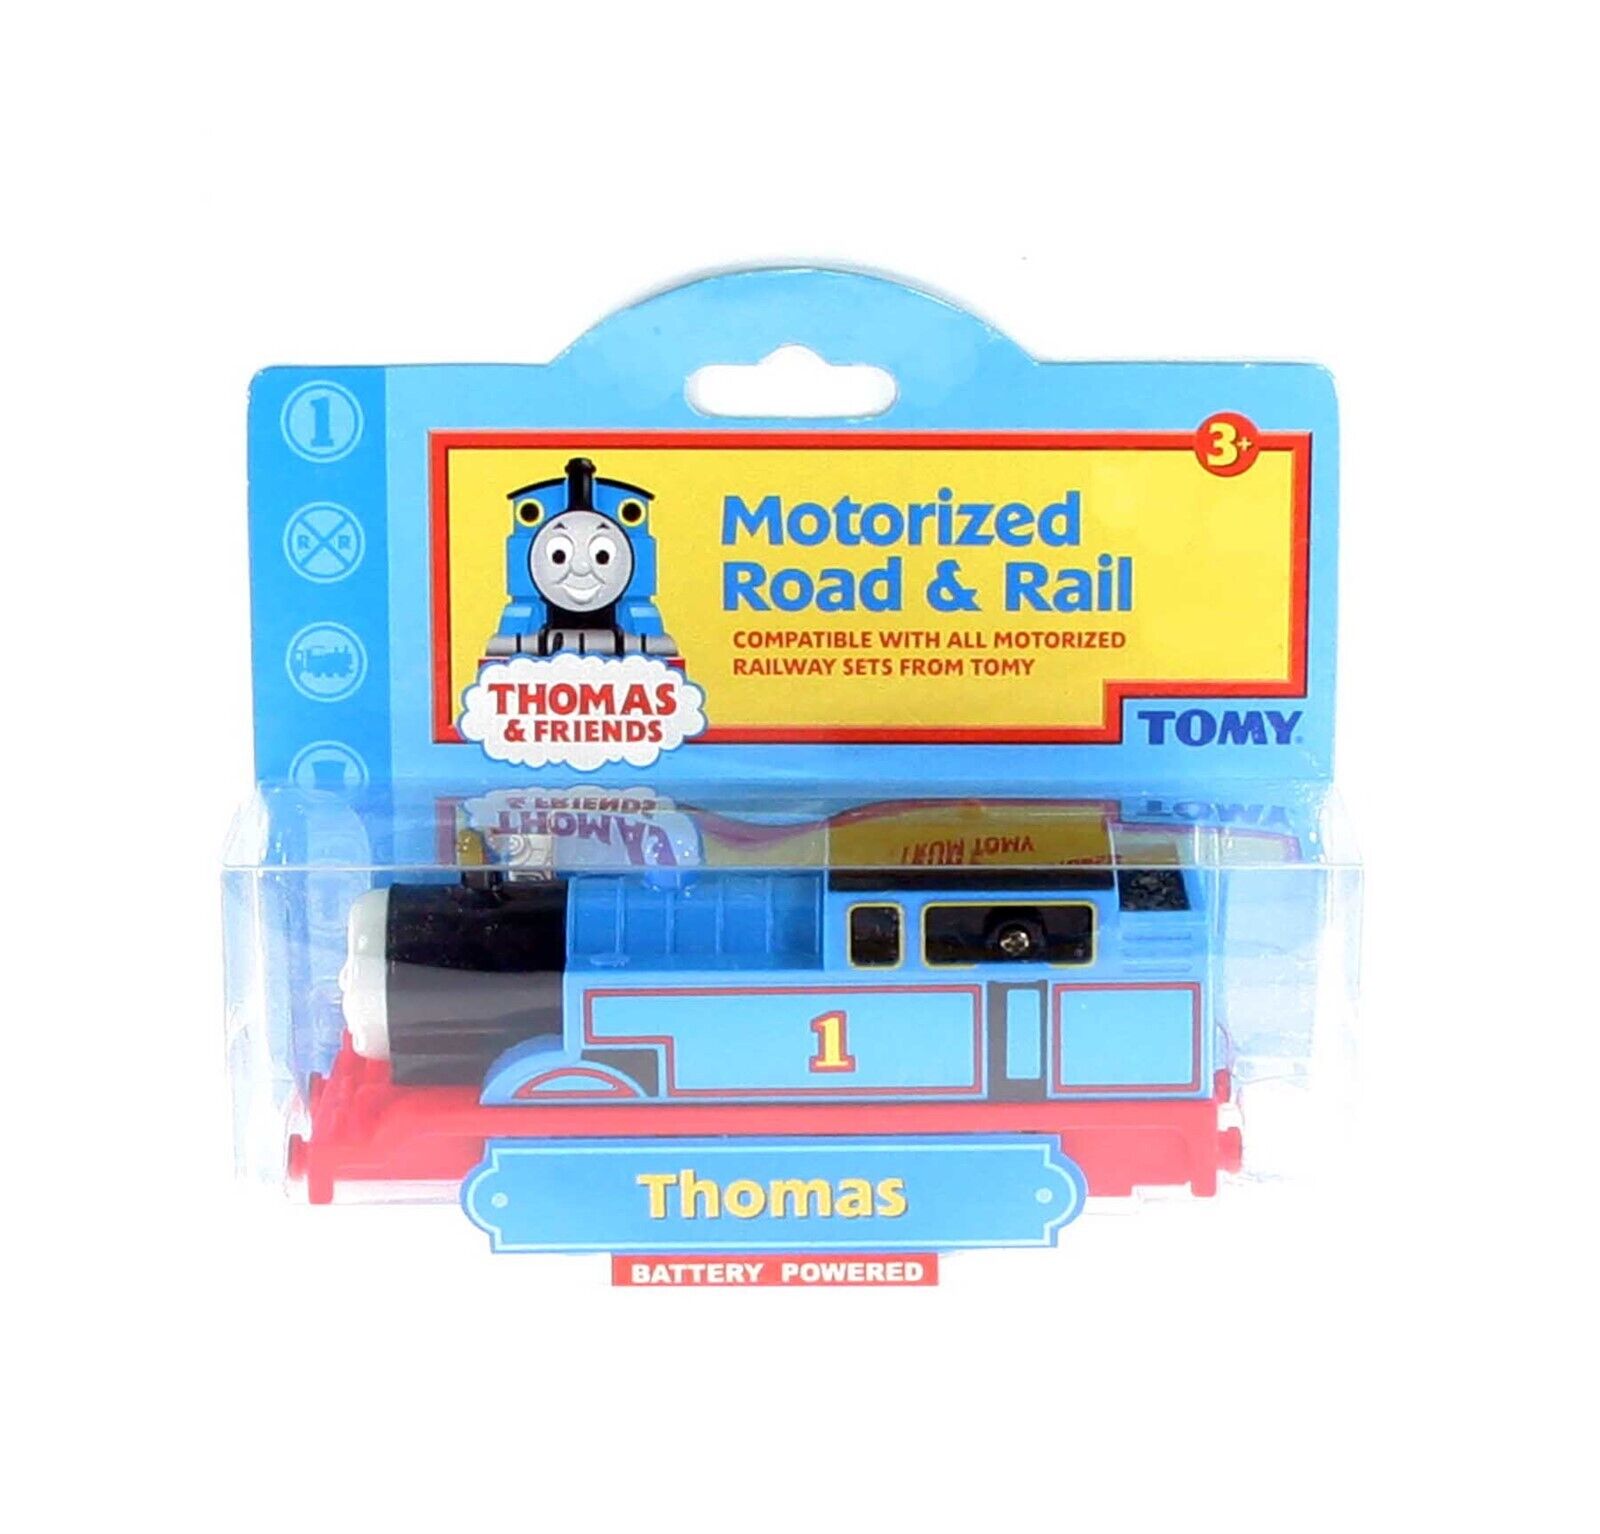 THOMAS & Friends Motorized Road & Rail Thomas 4786 New - Rare 2003